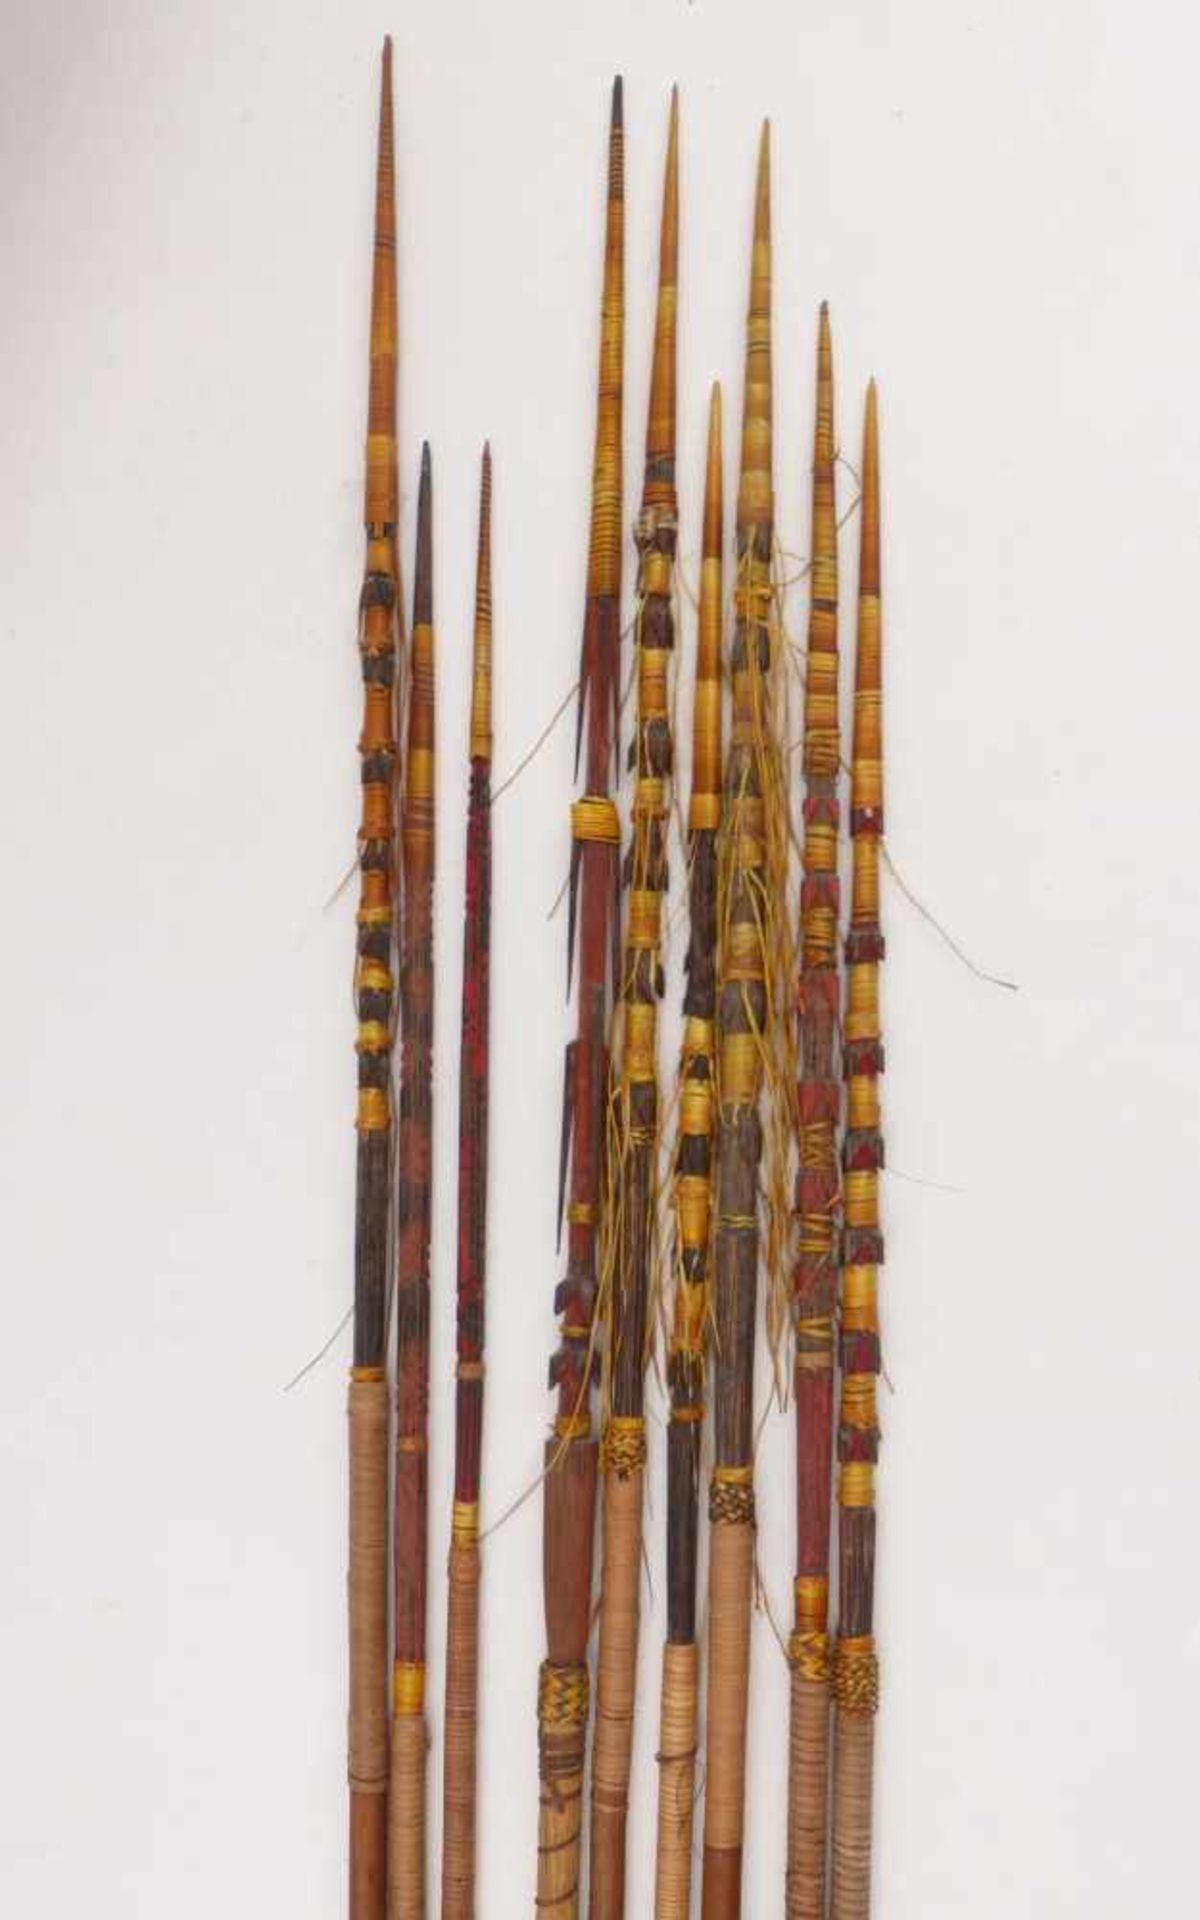 Neun seltene JagdpfeileSalomonen (Südsee)Holz mit Orchideenbast umwickelt. L. ca. 116 - 130 cm. - - Bild 2 aus 4